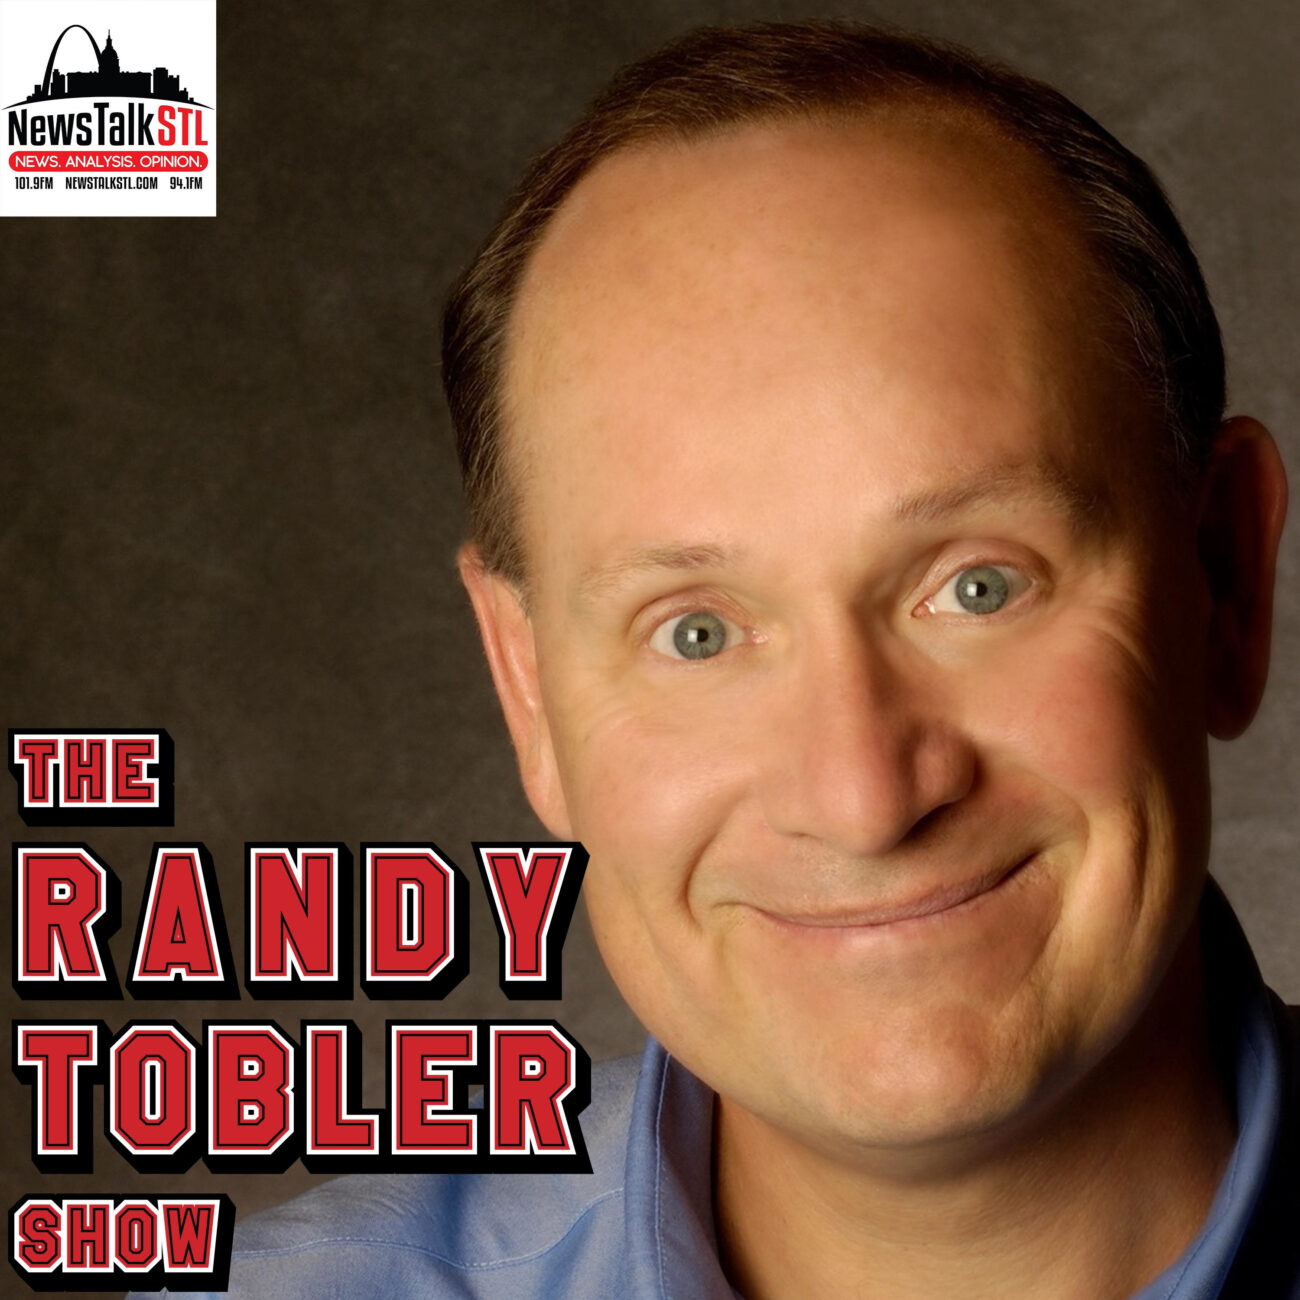 The Randy Tobler Show